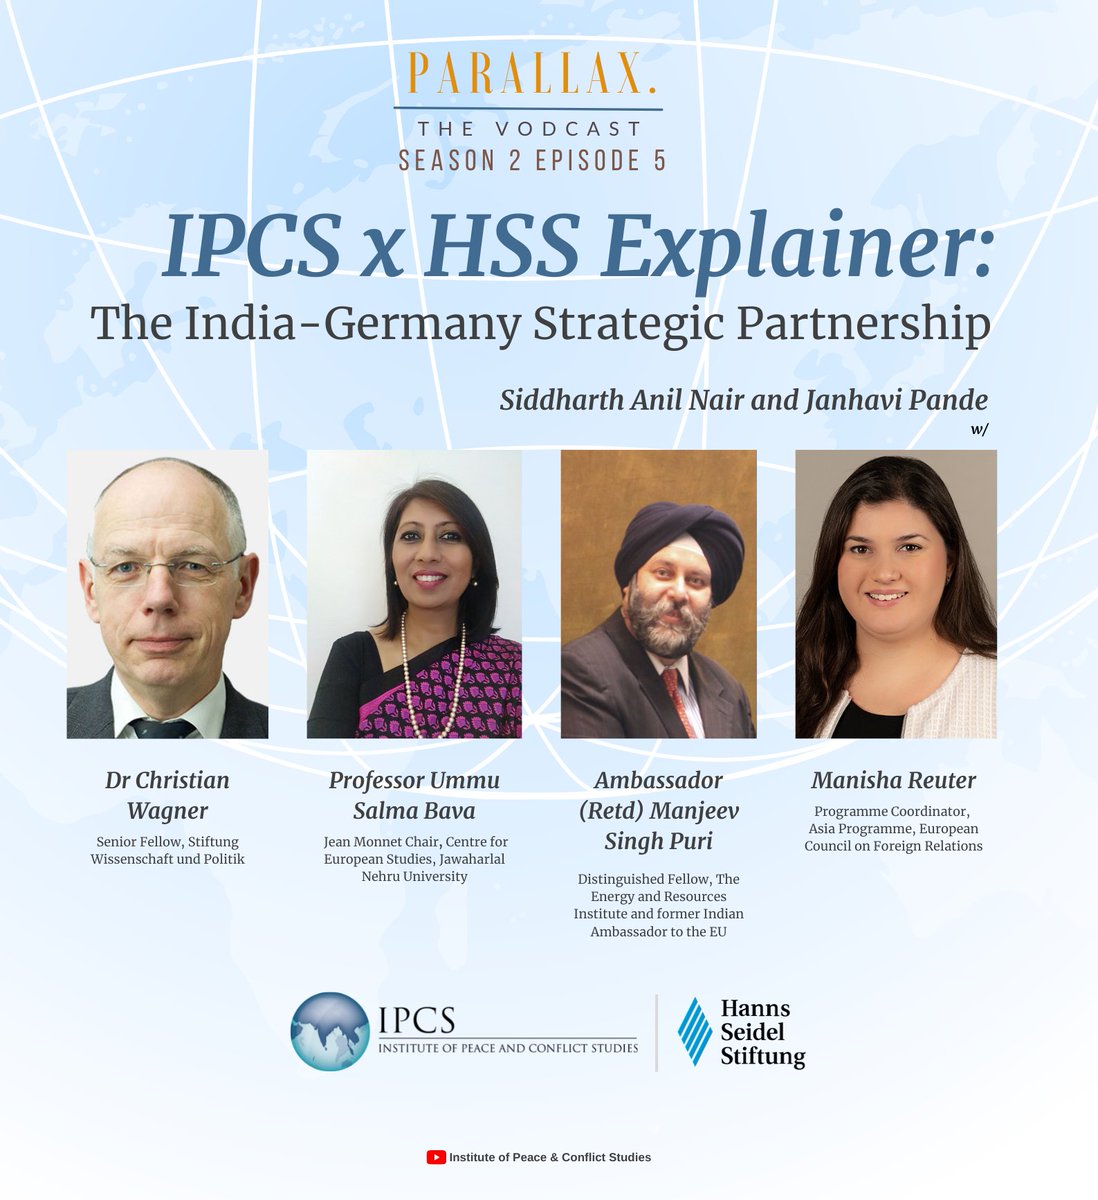 #IPCSParallax | S02E05 | In this special episode, IPCS’ @SiddharthAnilN1 and Janhavi Pande speak to Prof @SalmaBava, Amb (Retd) @ambmanjeevpuri, @ManishaReuter, and Dr Christian Wagner. To watch: youtu.be/bZmQvuU1x7s